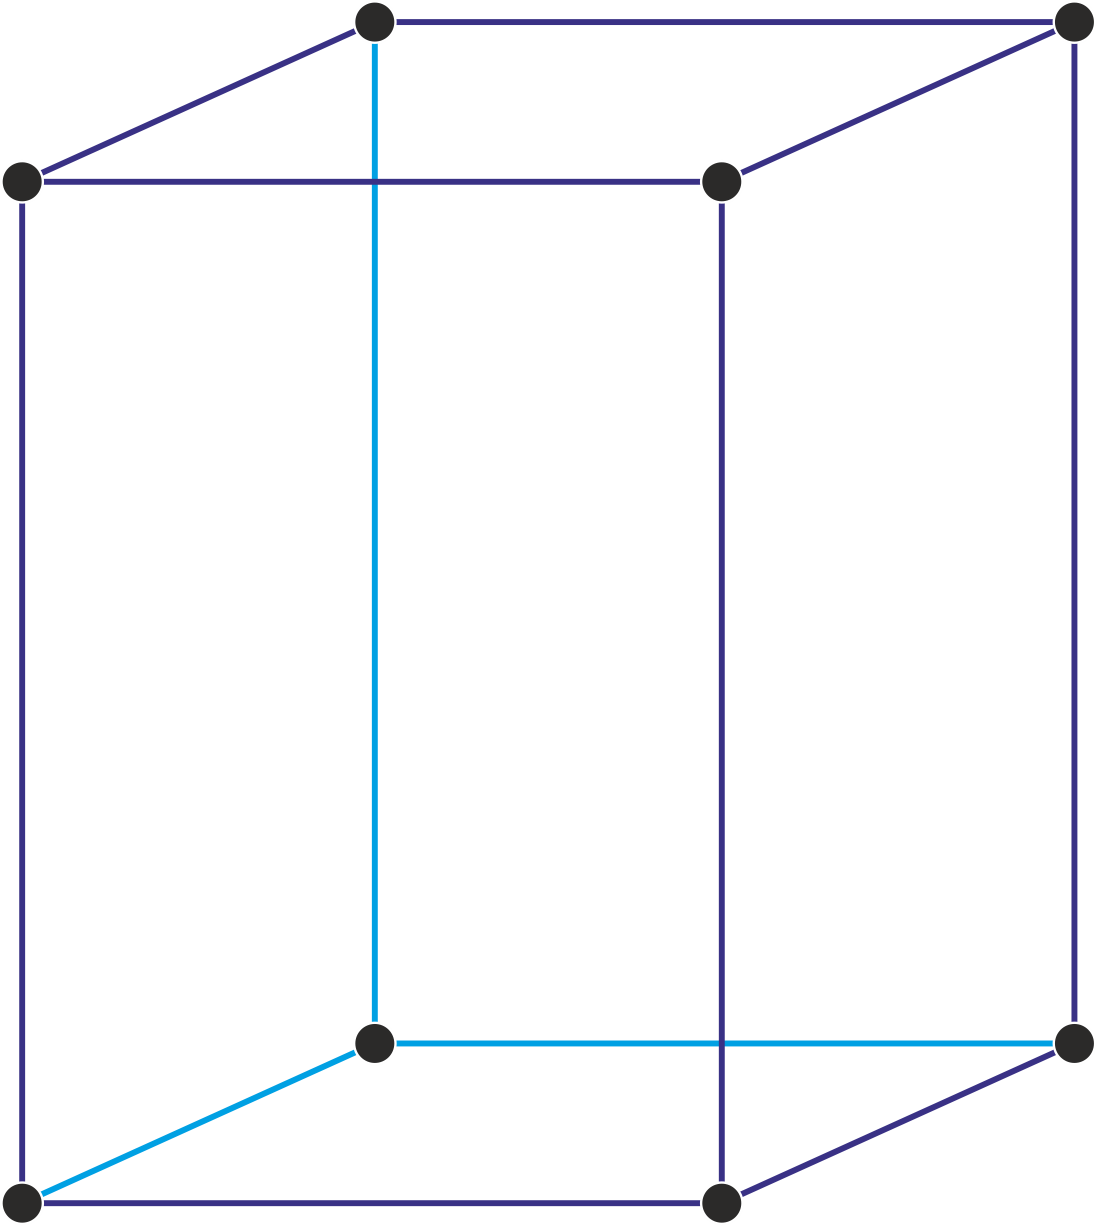 Primitive tetragonal unit cell